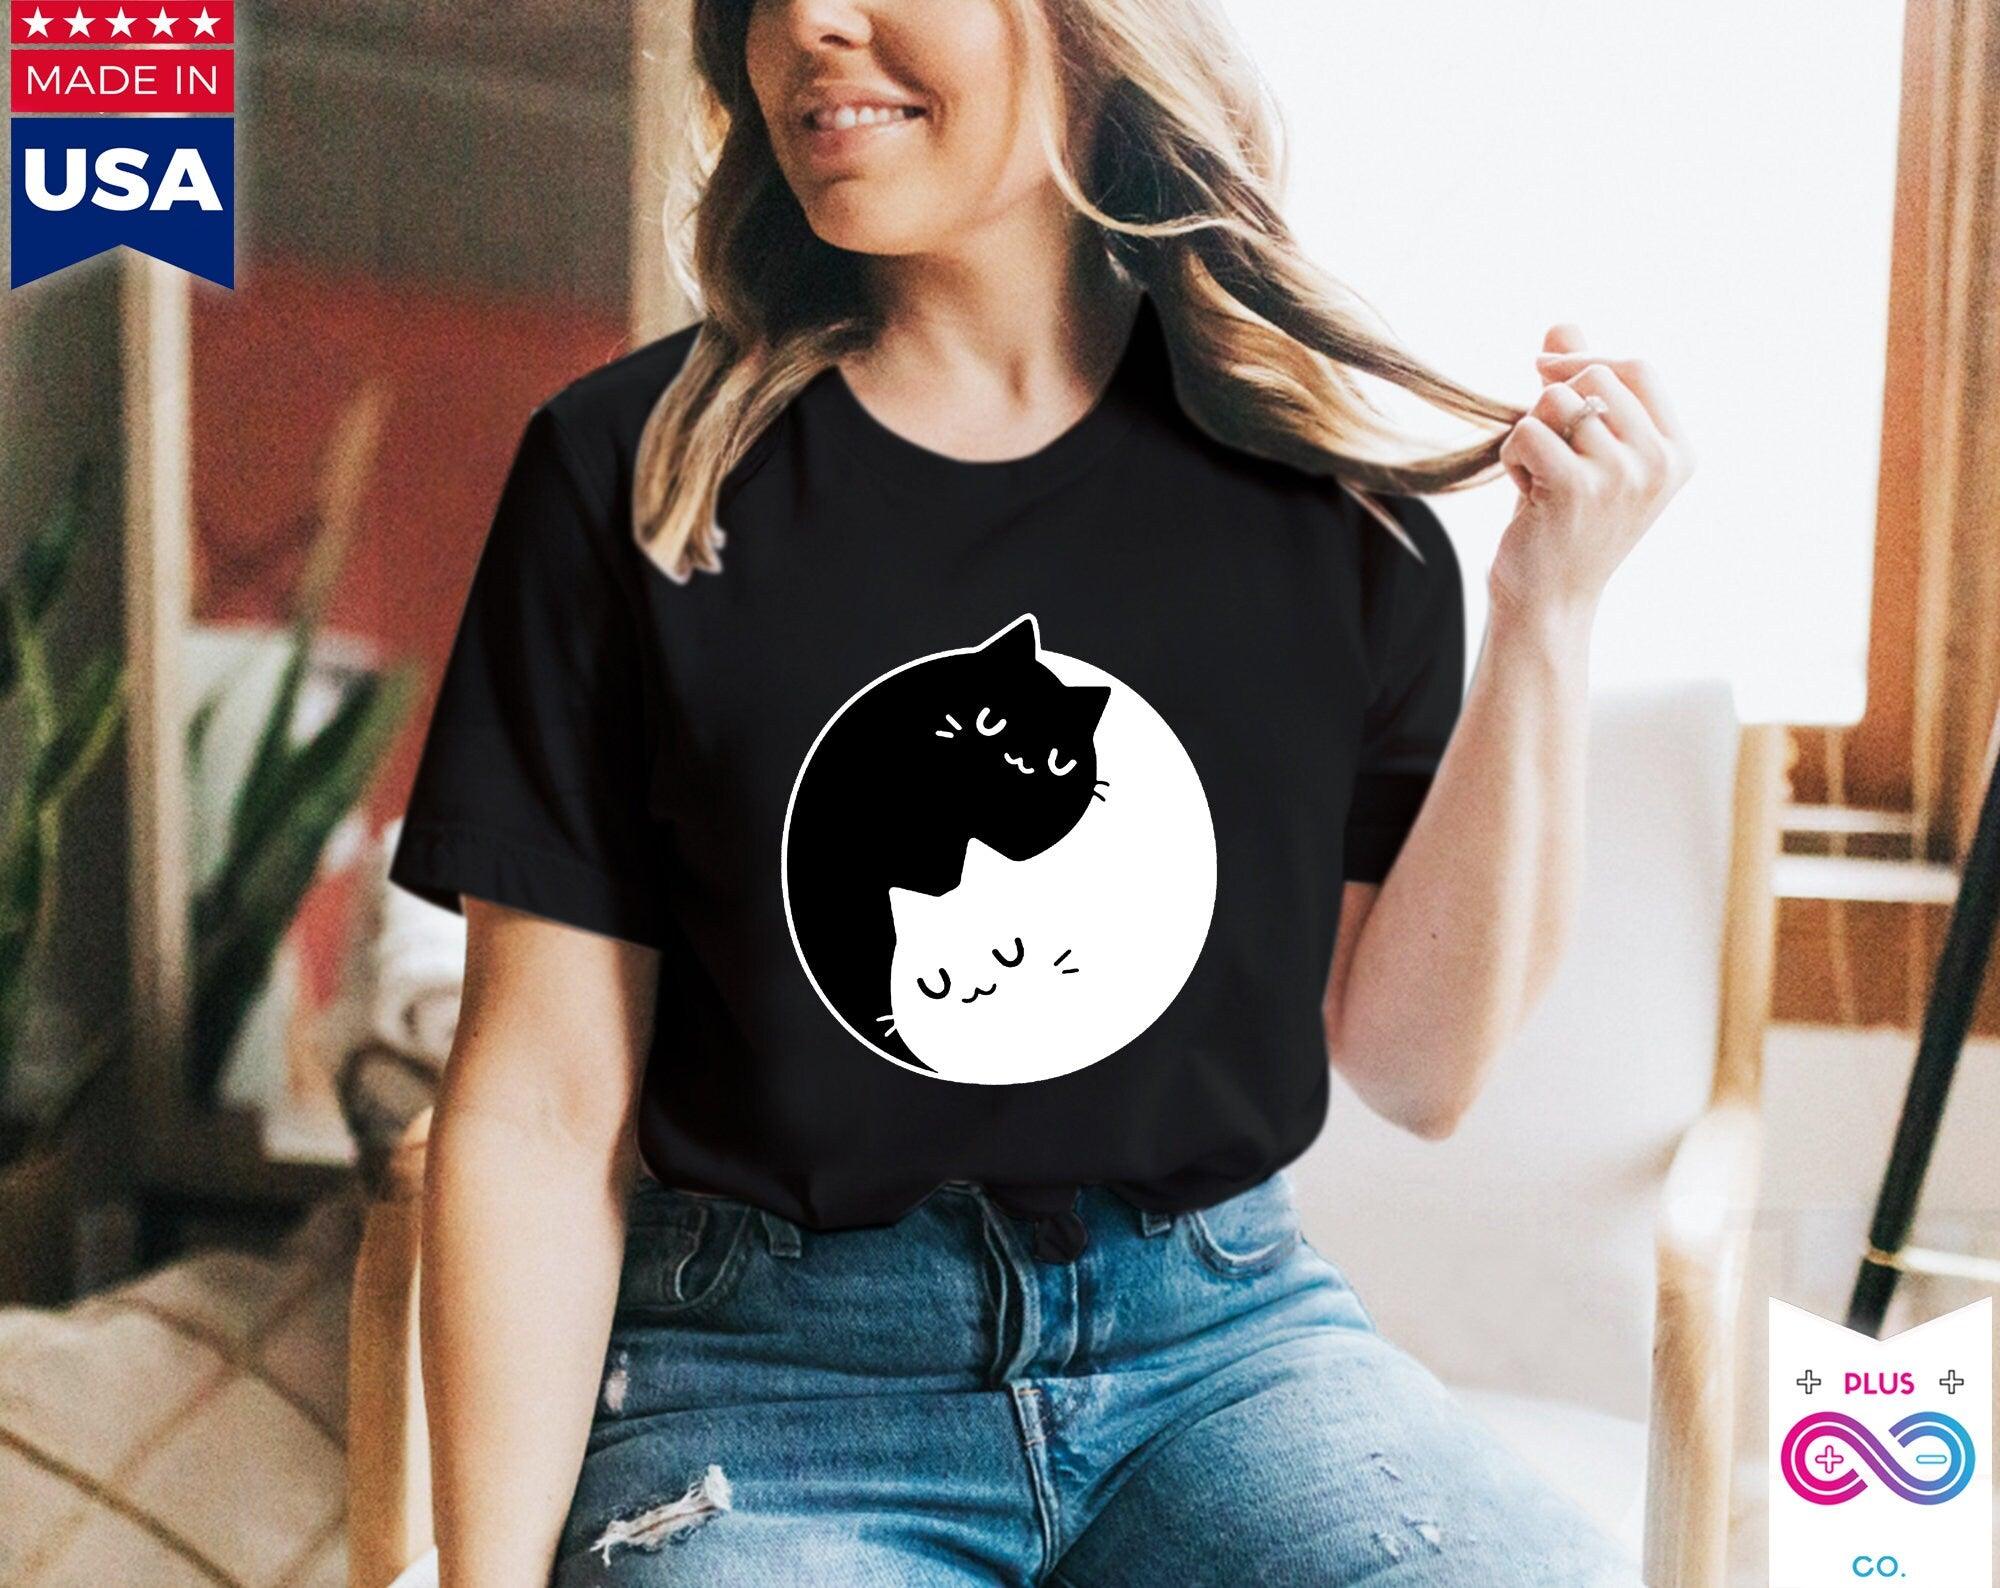 Yin Yang Cats T-skjorter , Yin Yang Duality || Yin Yang Cats || Perfekt gave - SML Xl - Dame, Herre Unisex || Bff-gaveideer for par, kattemamma-t-skjorte, t-skjorter - plusminusco.com